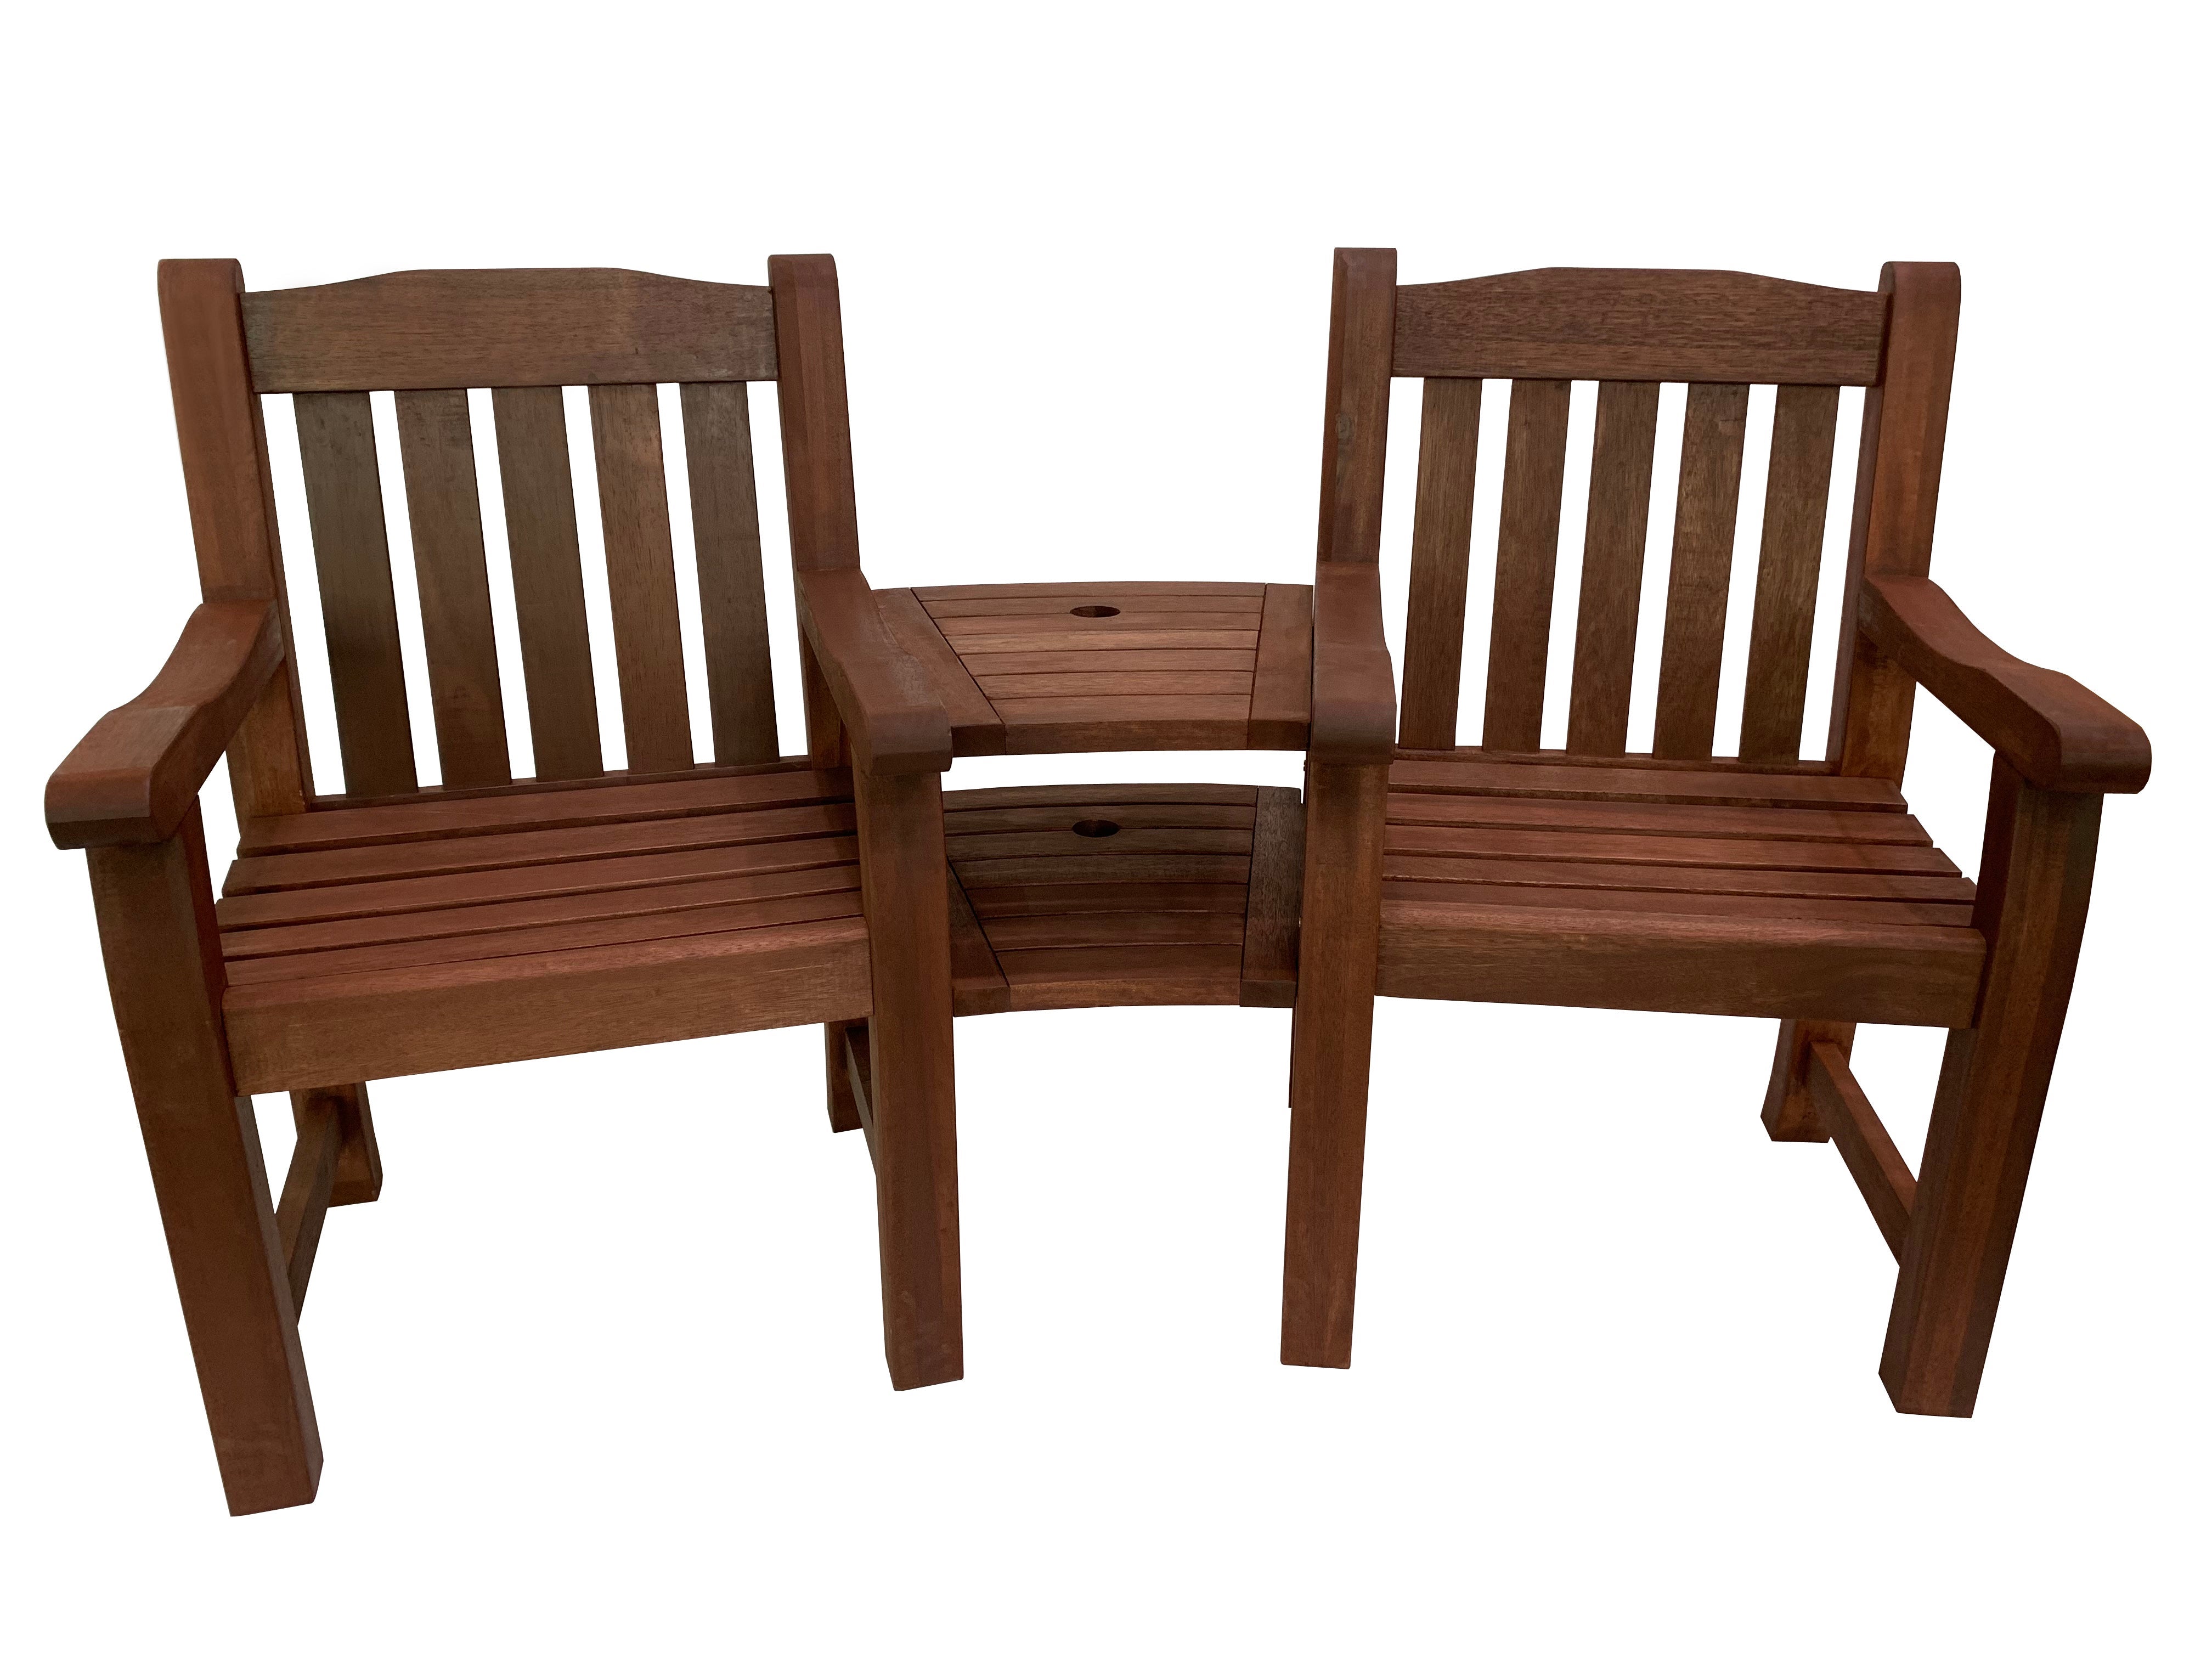 Hamburg Jack & Jill Chair | Buy Outdoor Lounge Chairs - 1509199